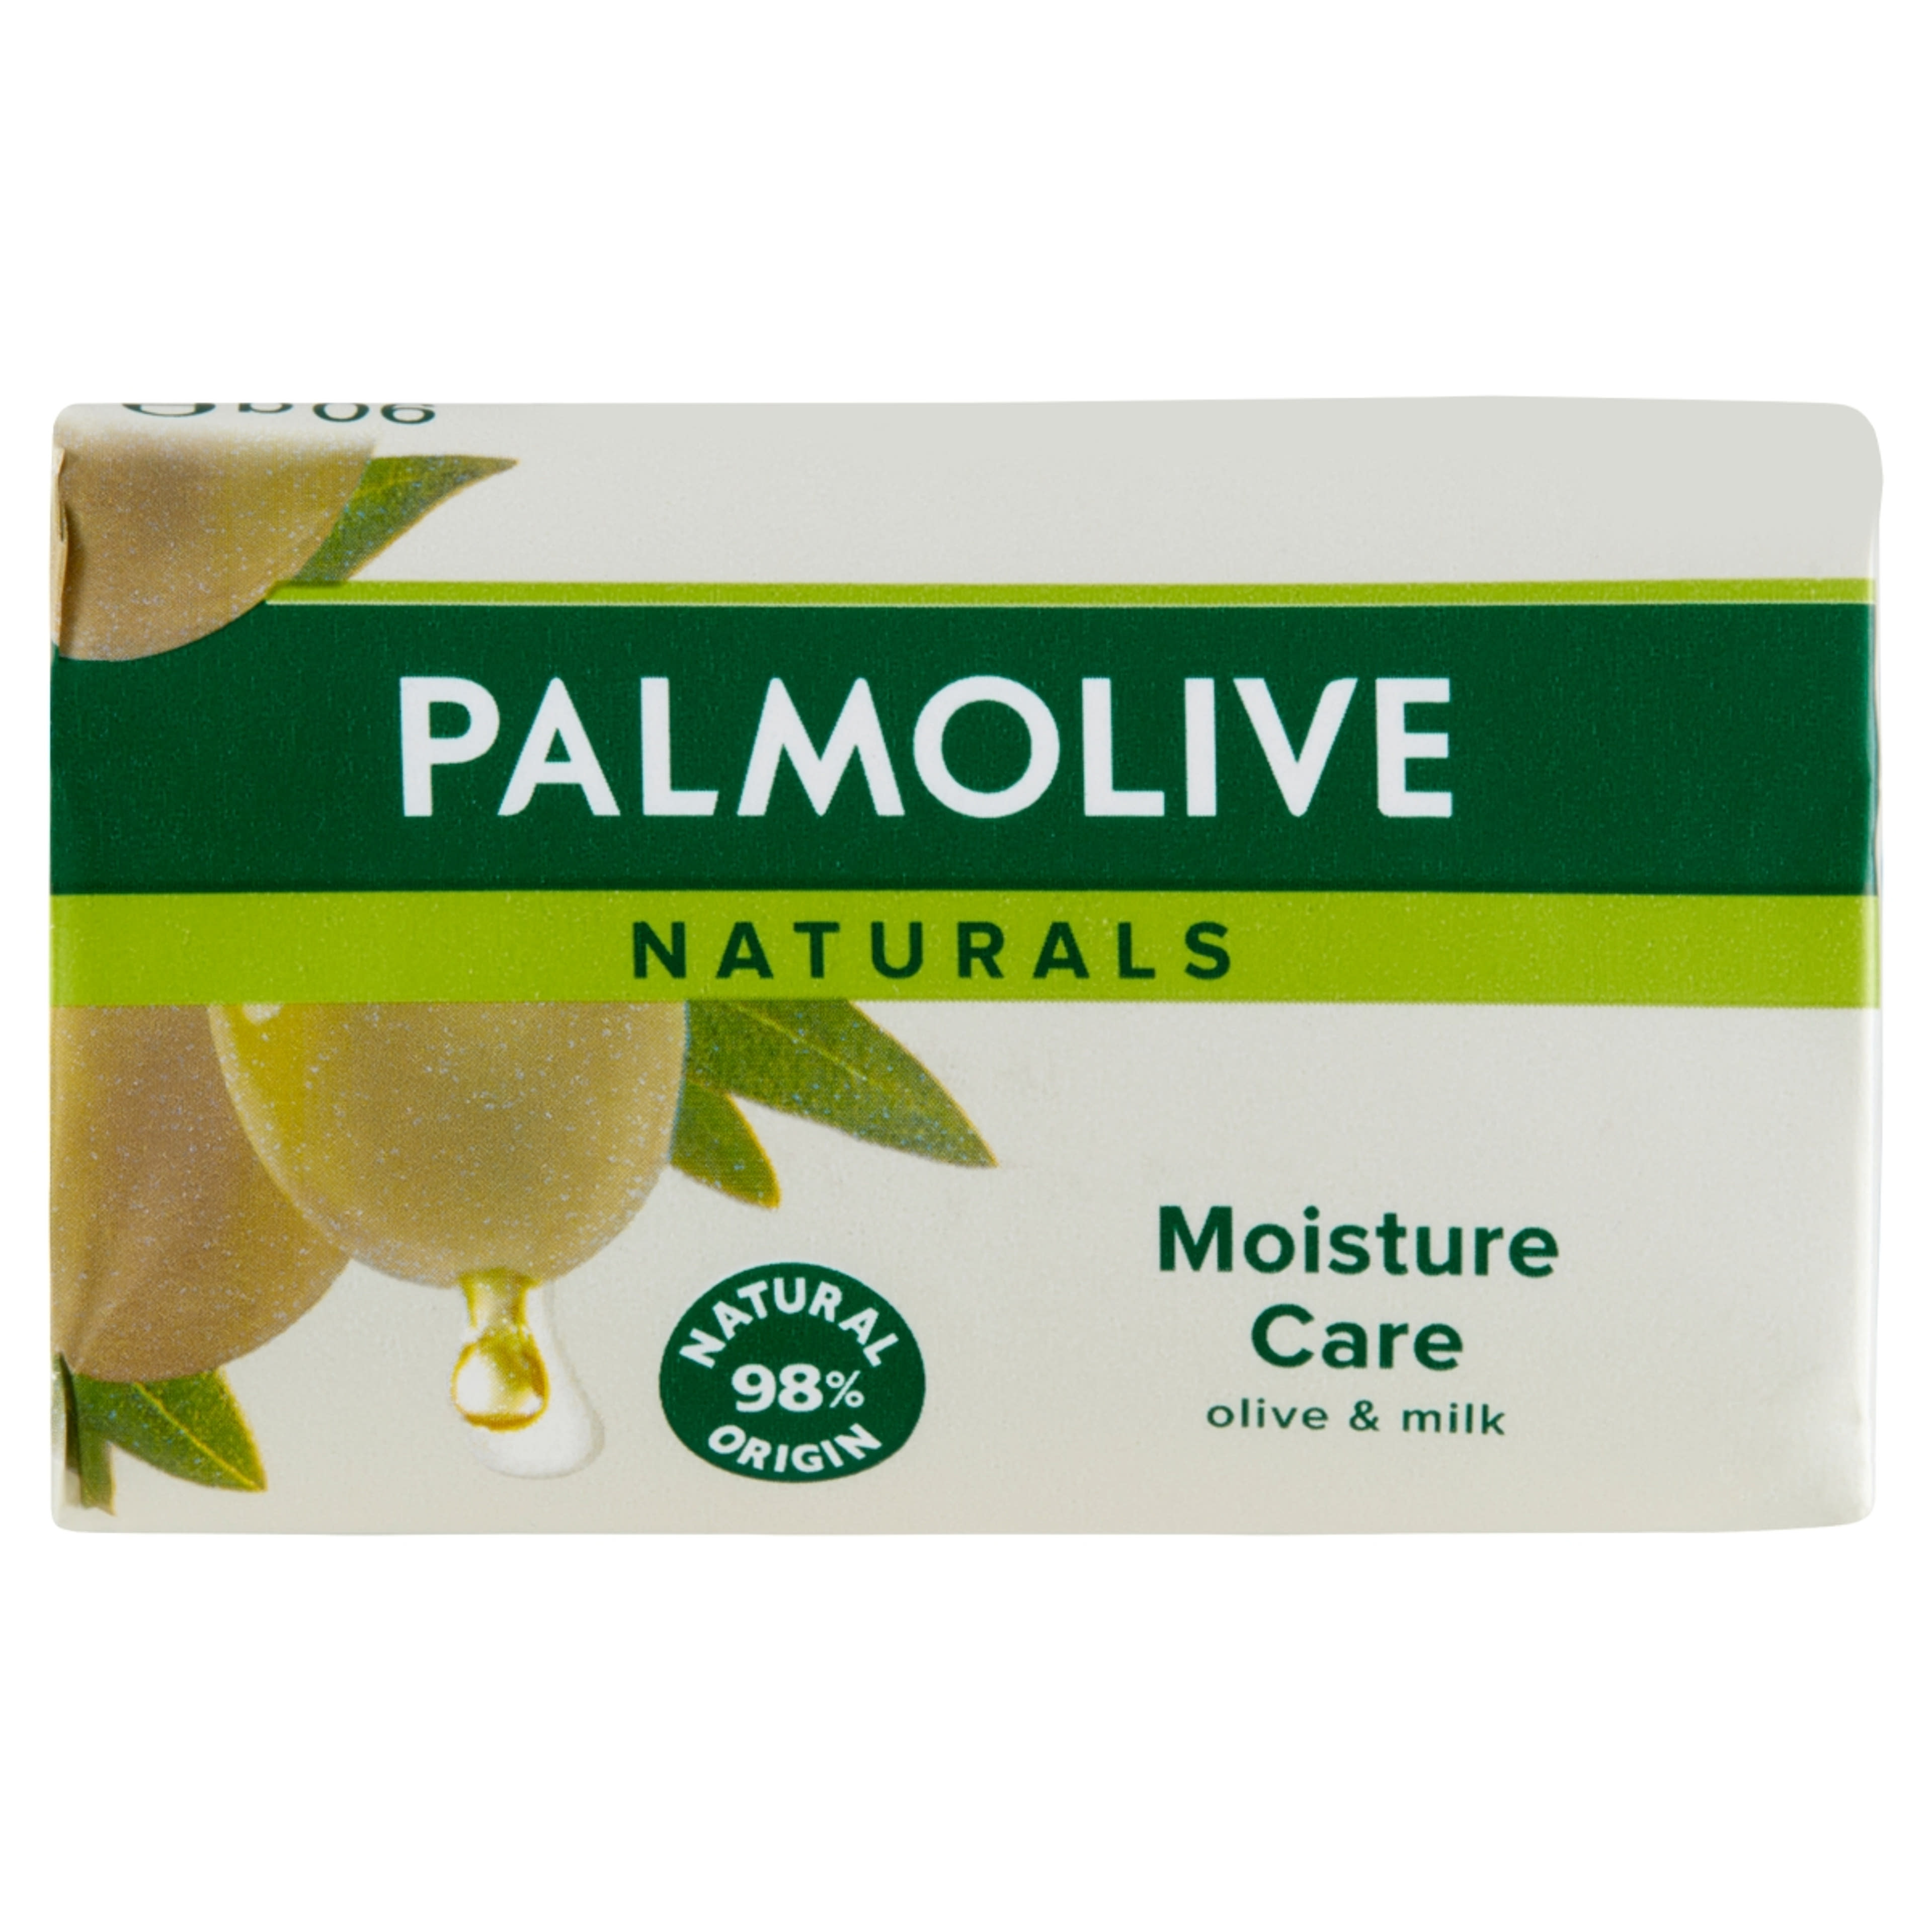 Palmolive Naturals Moisture Care pipereszappan - 90 g